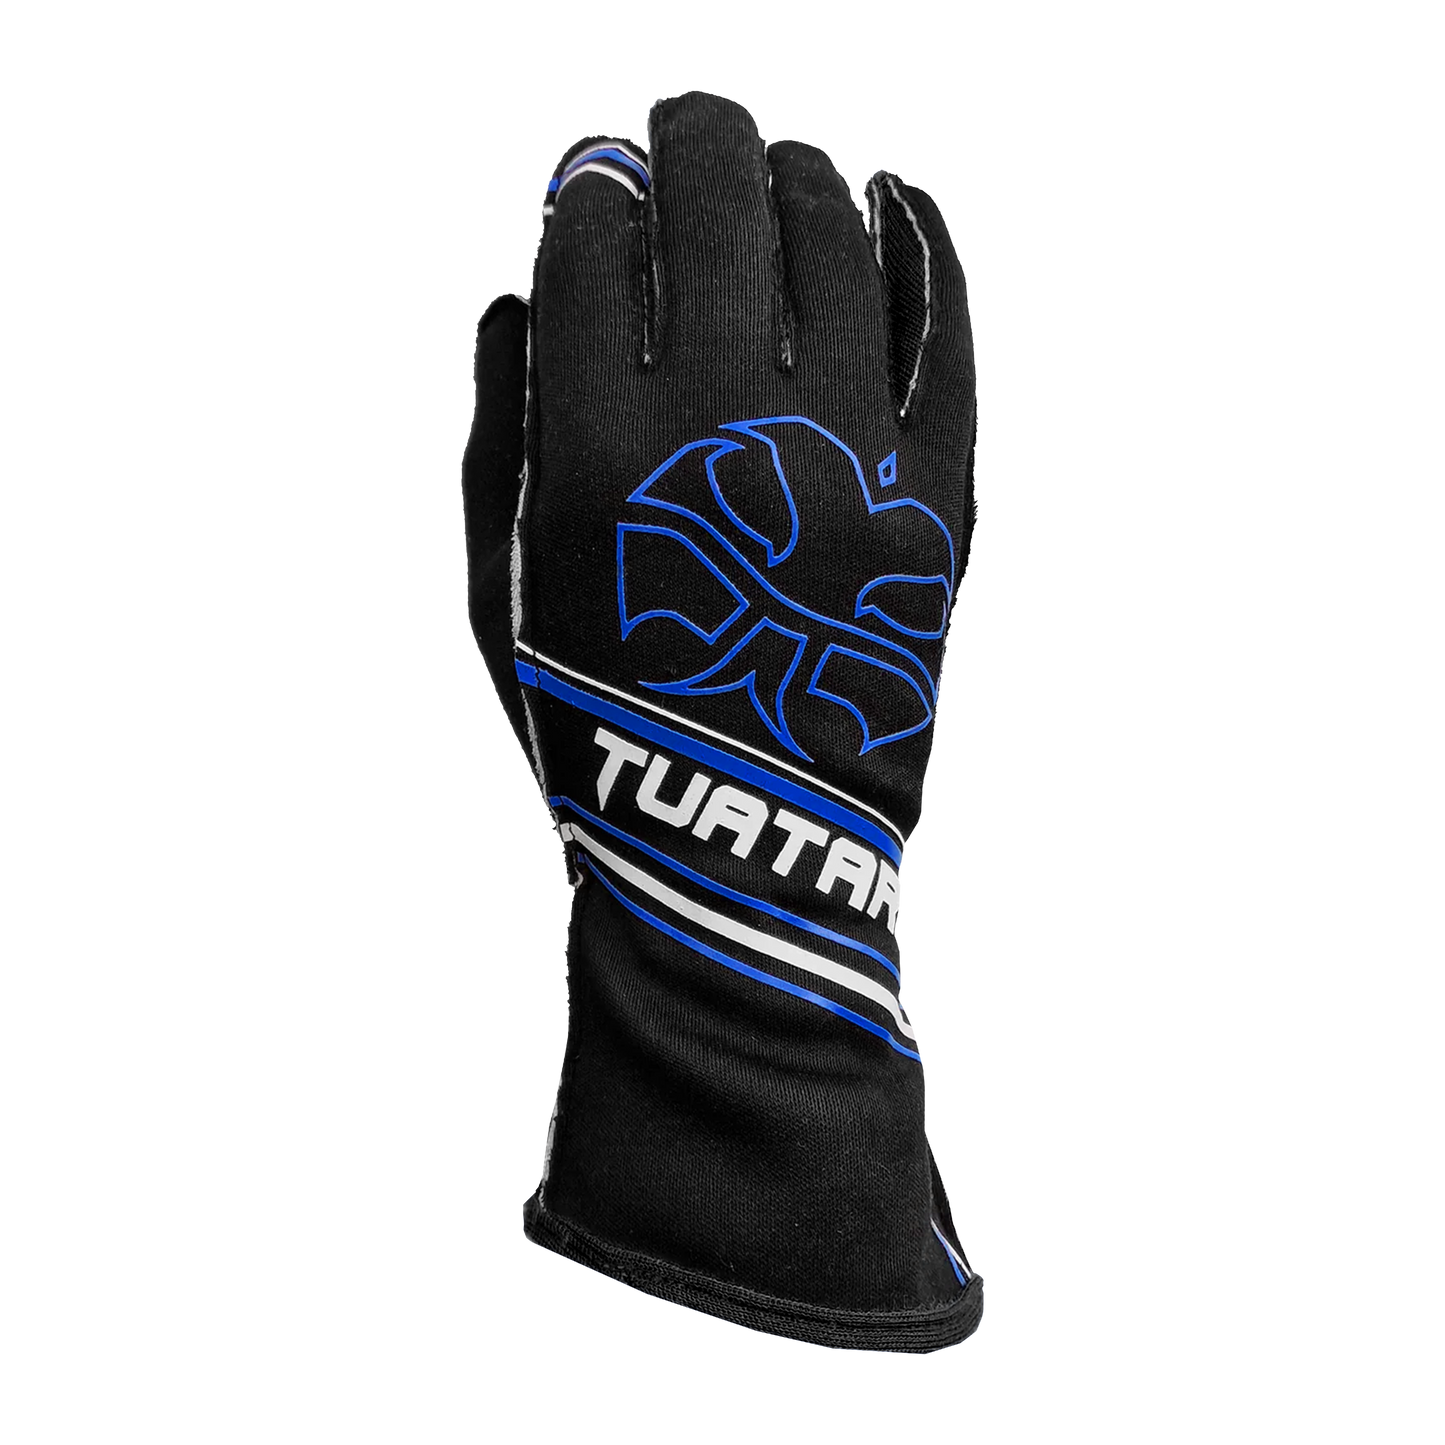 Ultimate Race Handschuhe – Ultra Grip – DOMINATOR – BLK/BL